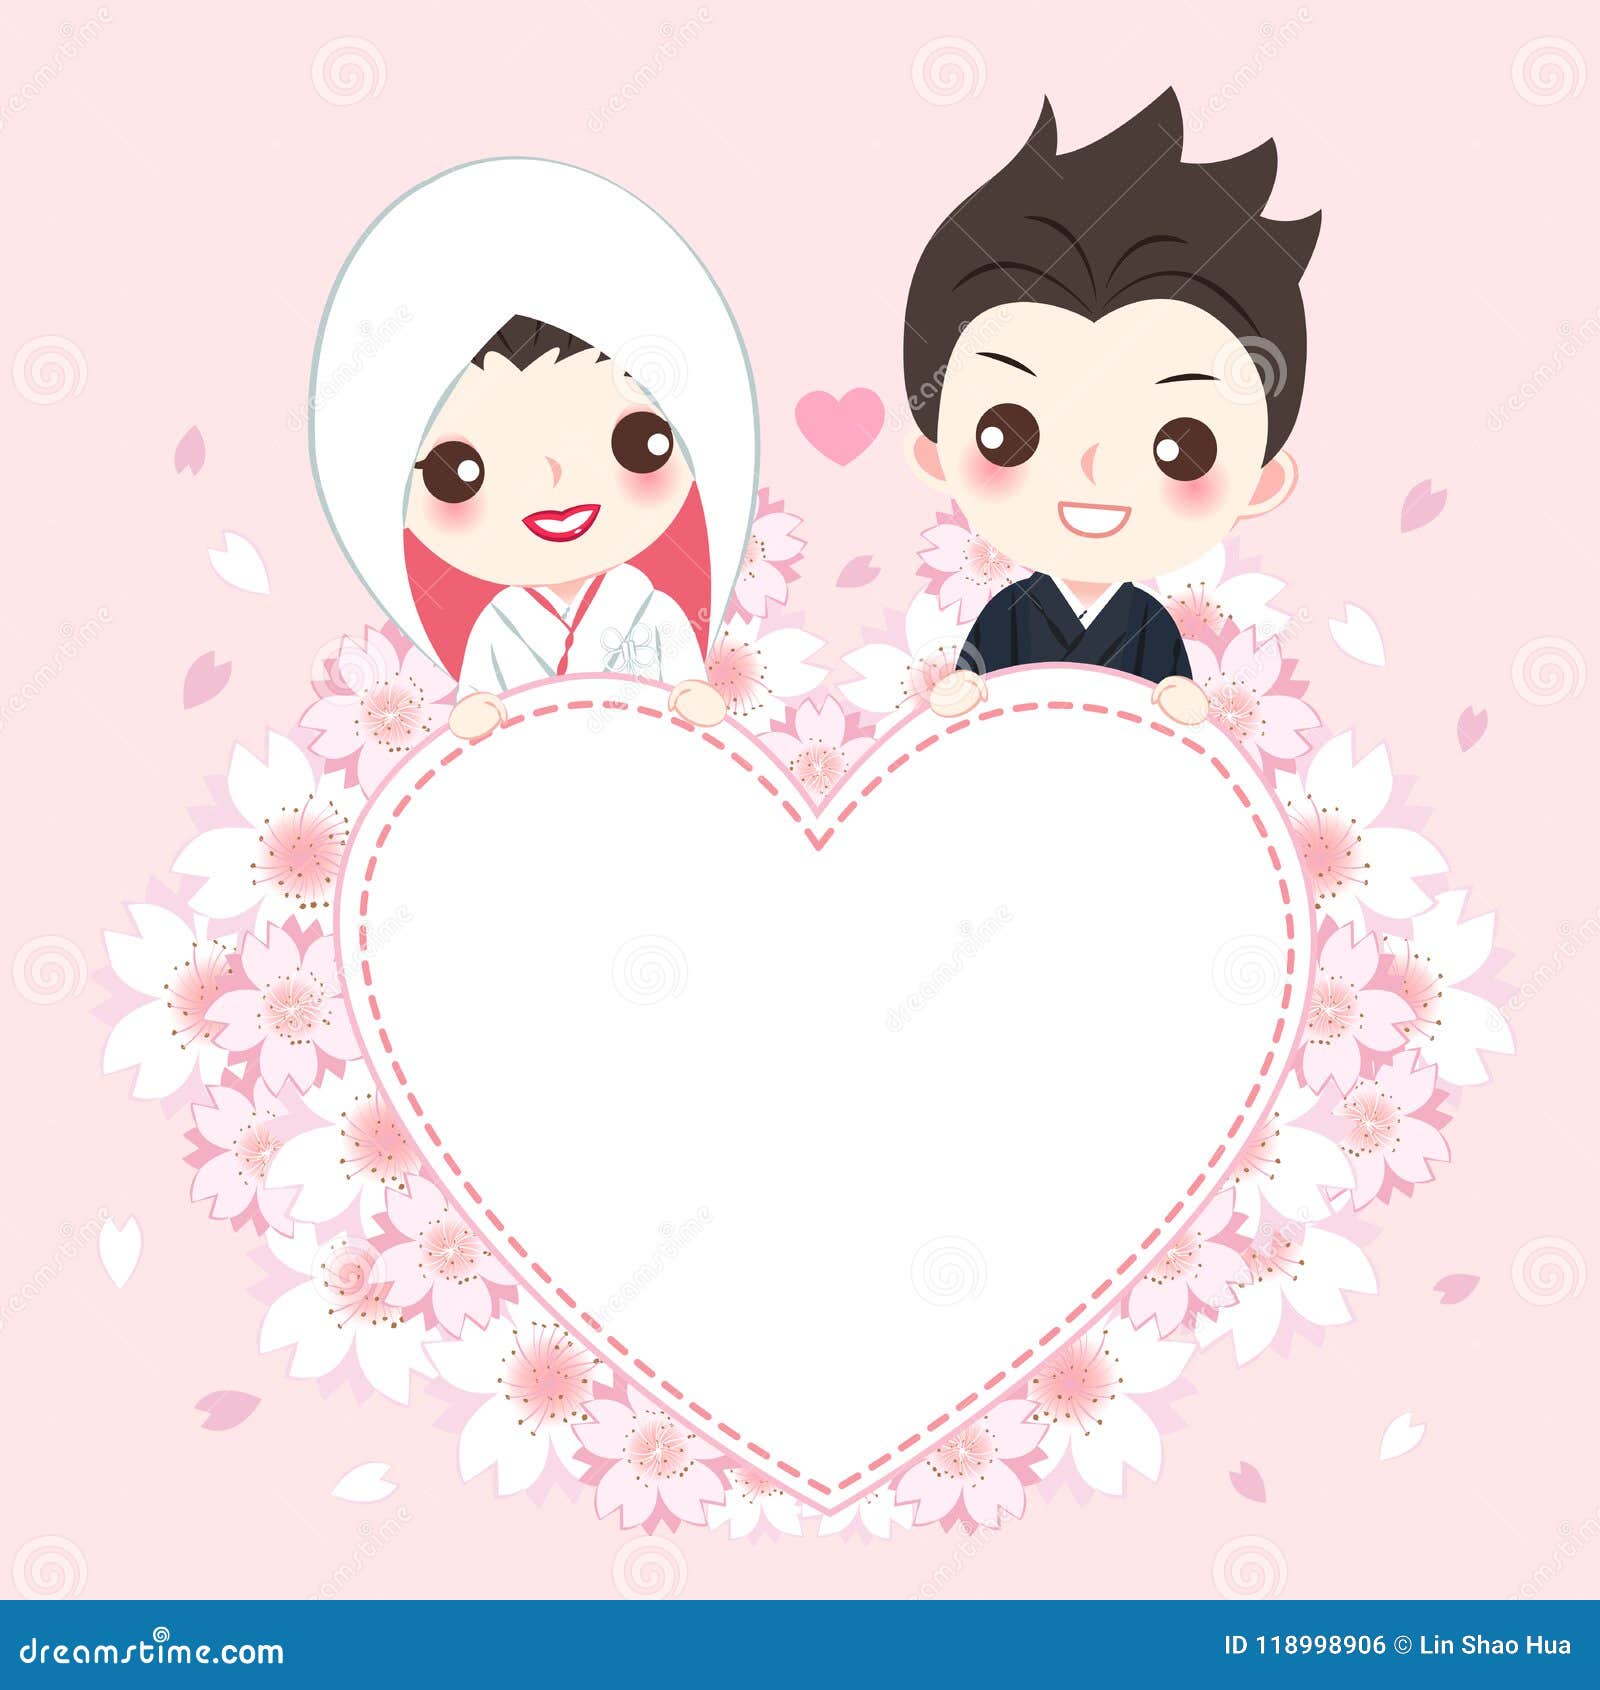 https://thumbs.dreamstime.com/z/cute-cartoon-japanese-wedding-couple-pink-background-118998906.jpg